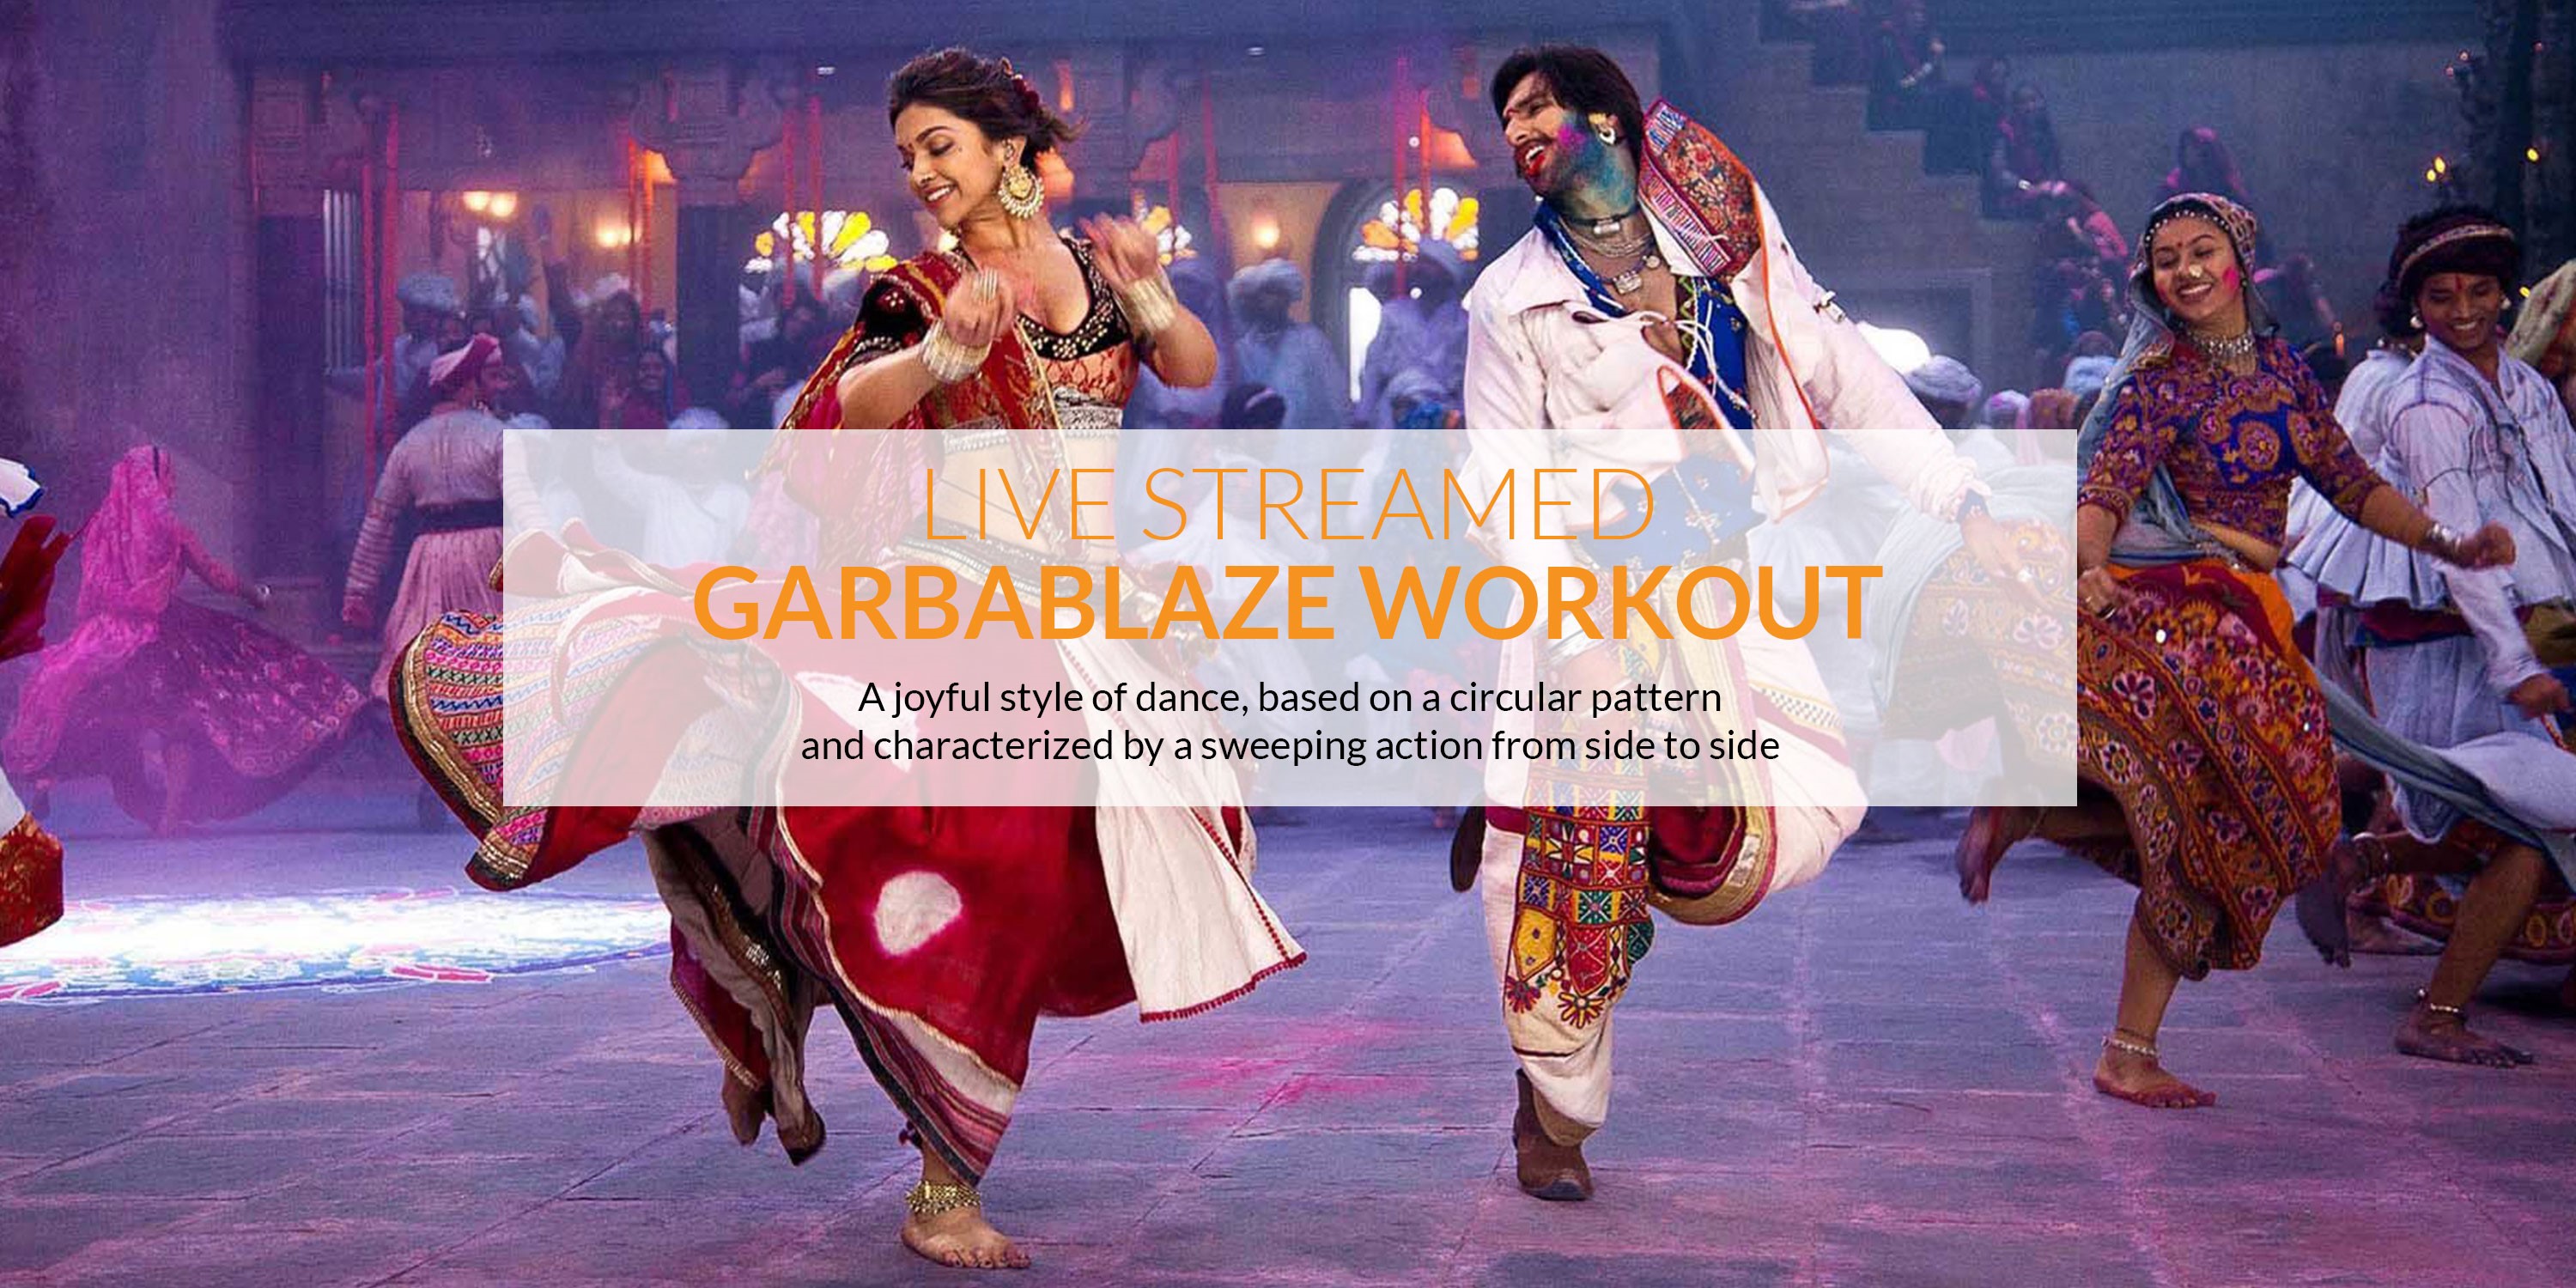 The best GarbaBlaze Workout live-streamed